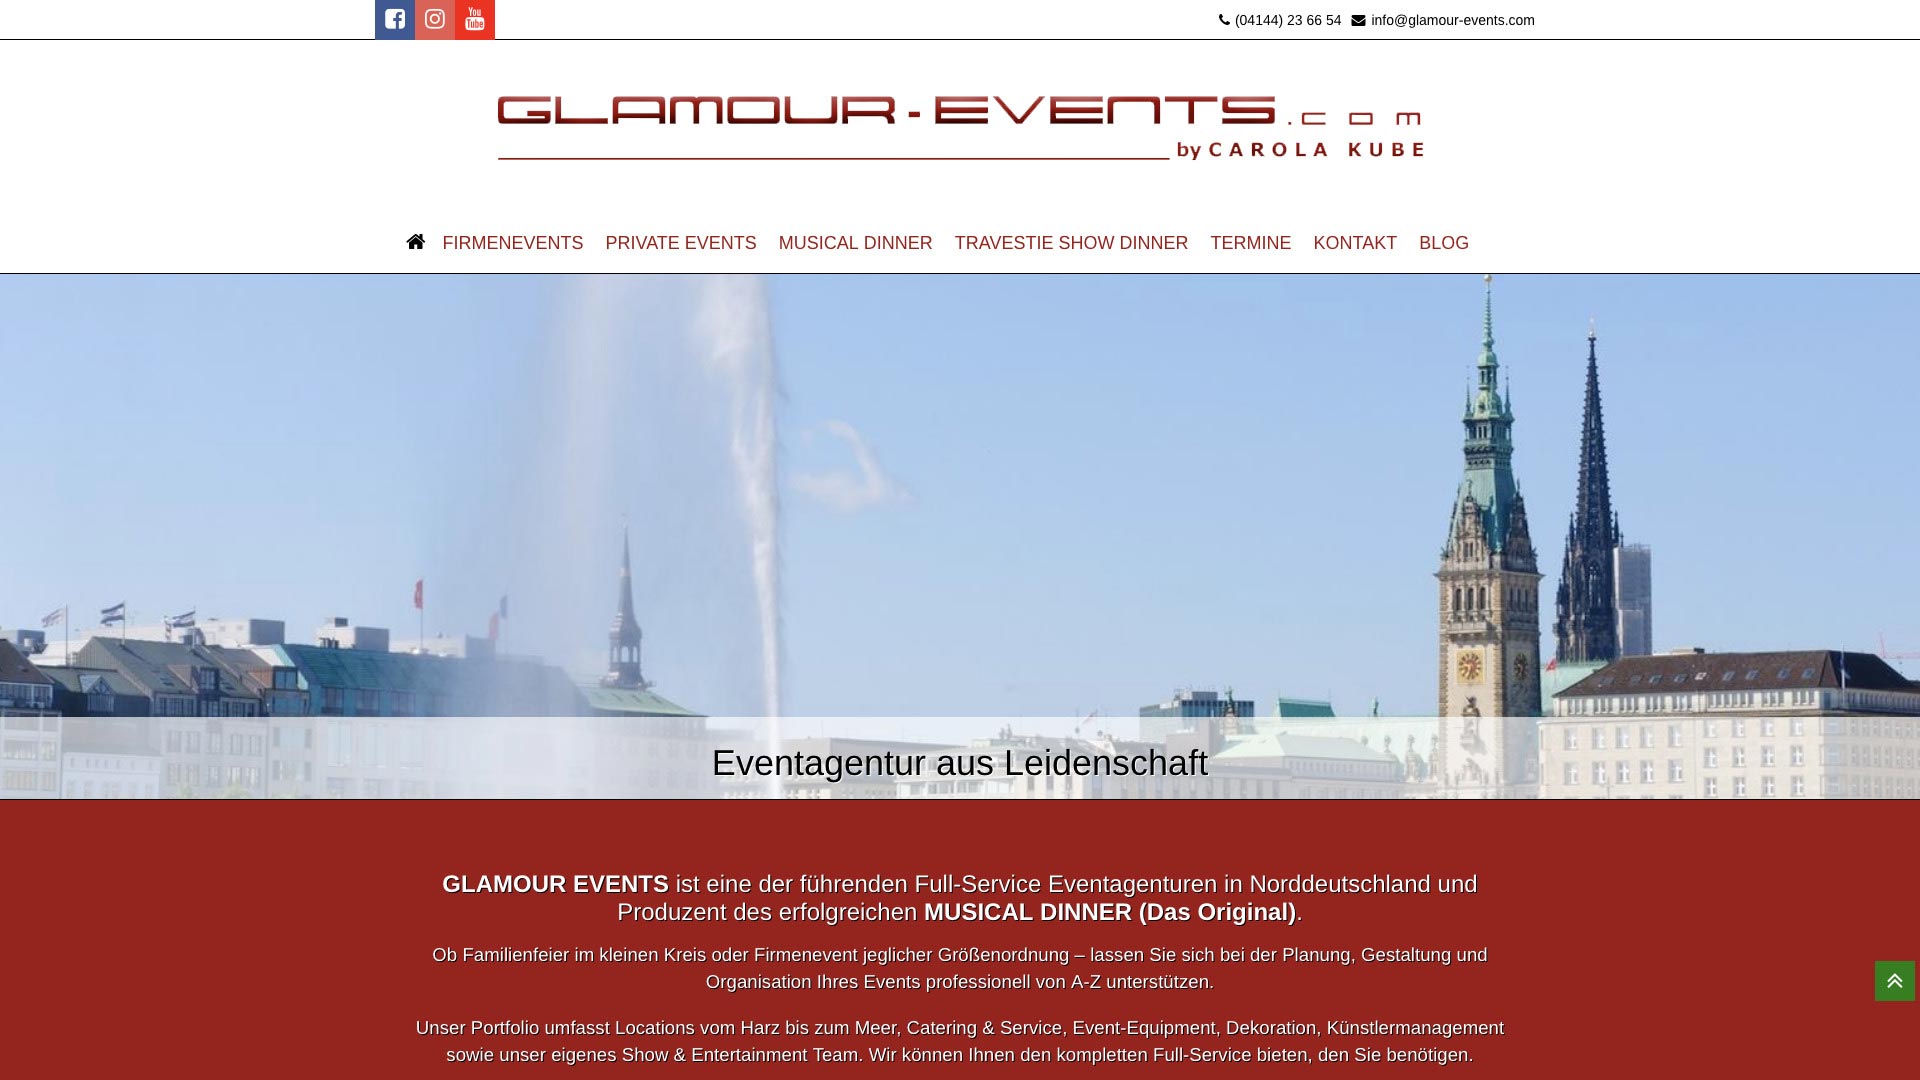 GLAMOUR-EVENTS Eventagentur